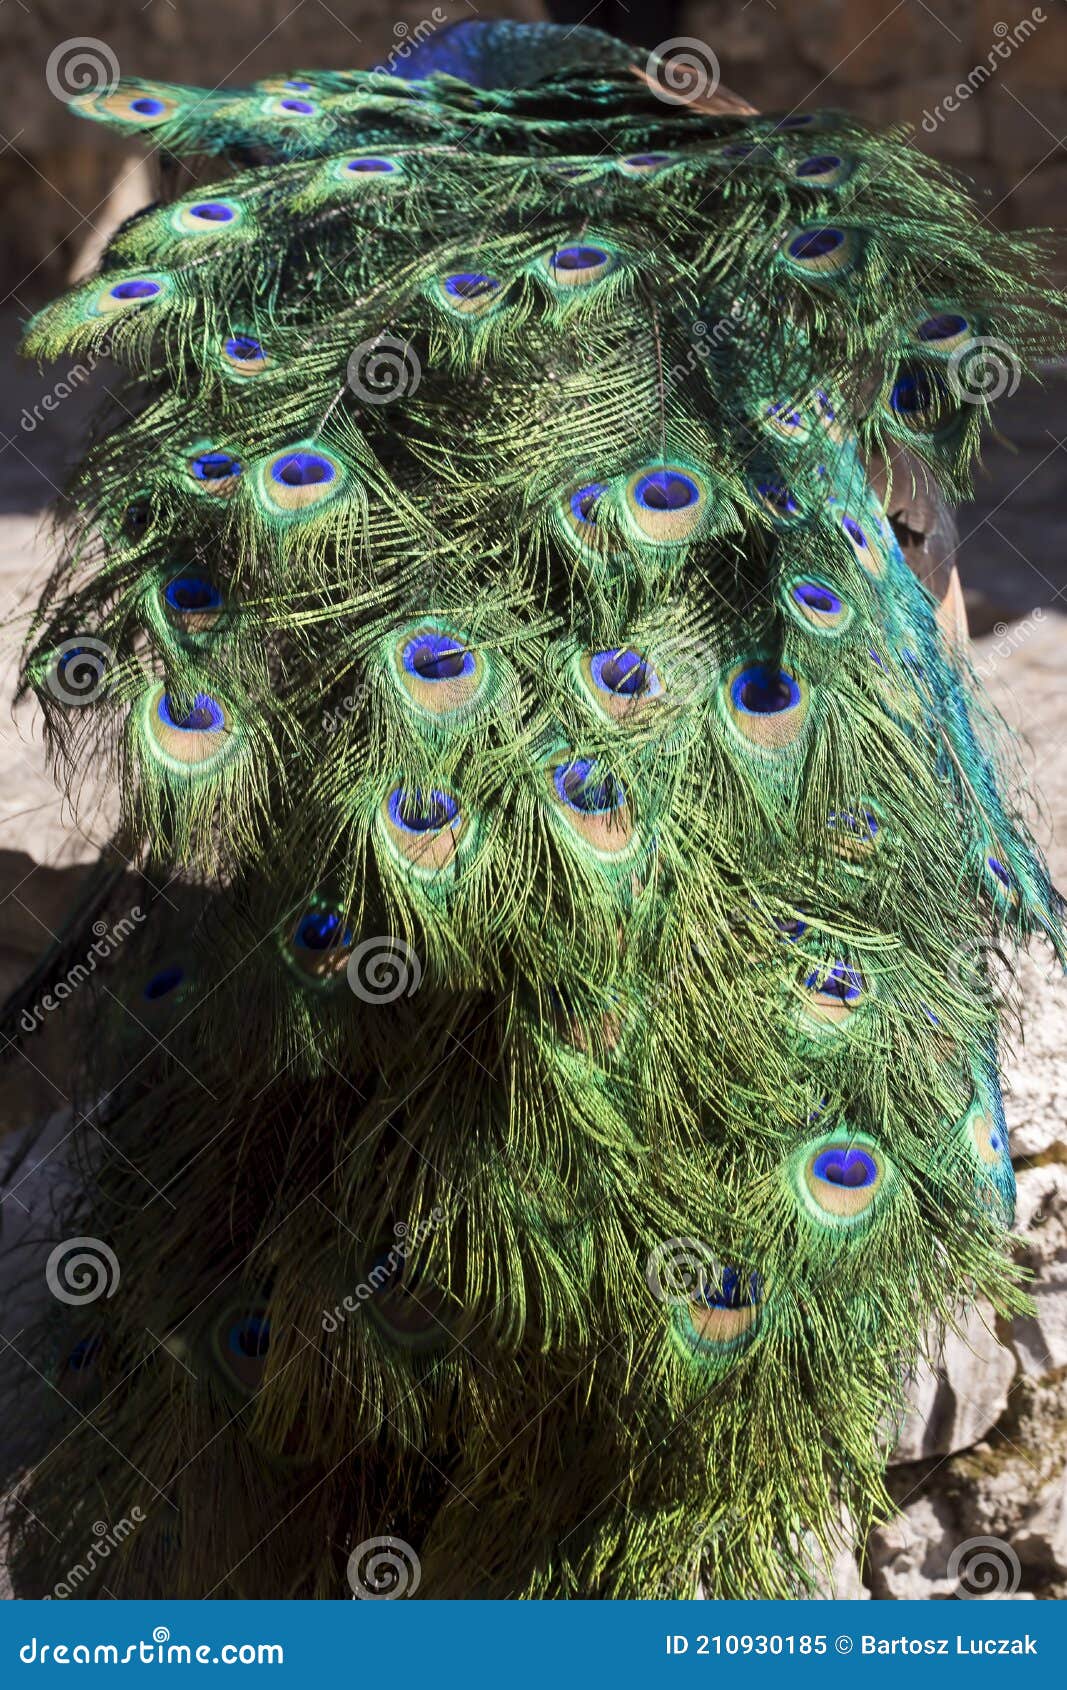 peacock bird in town chefchouen